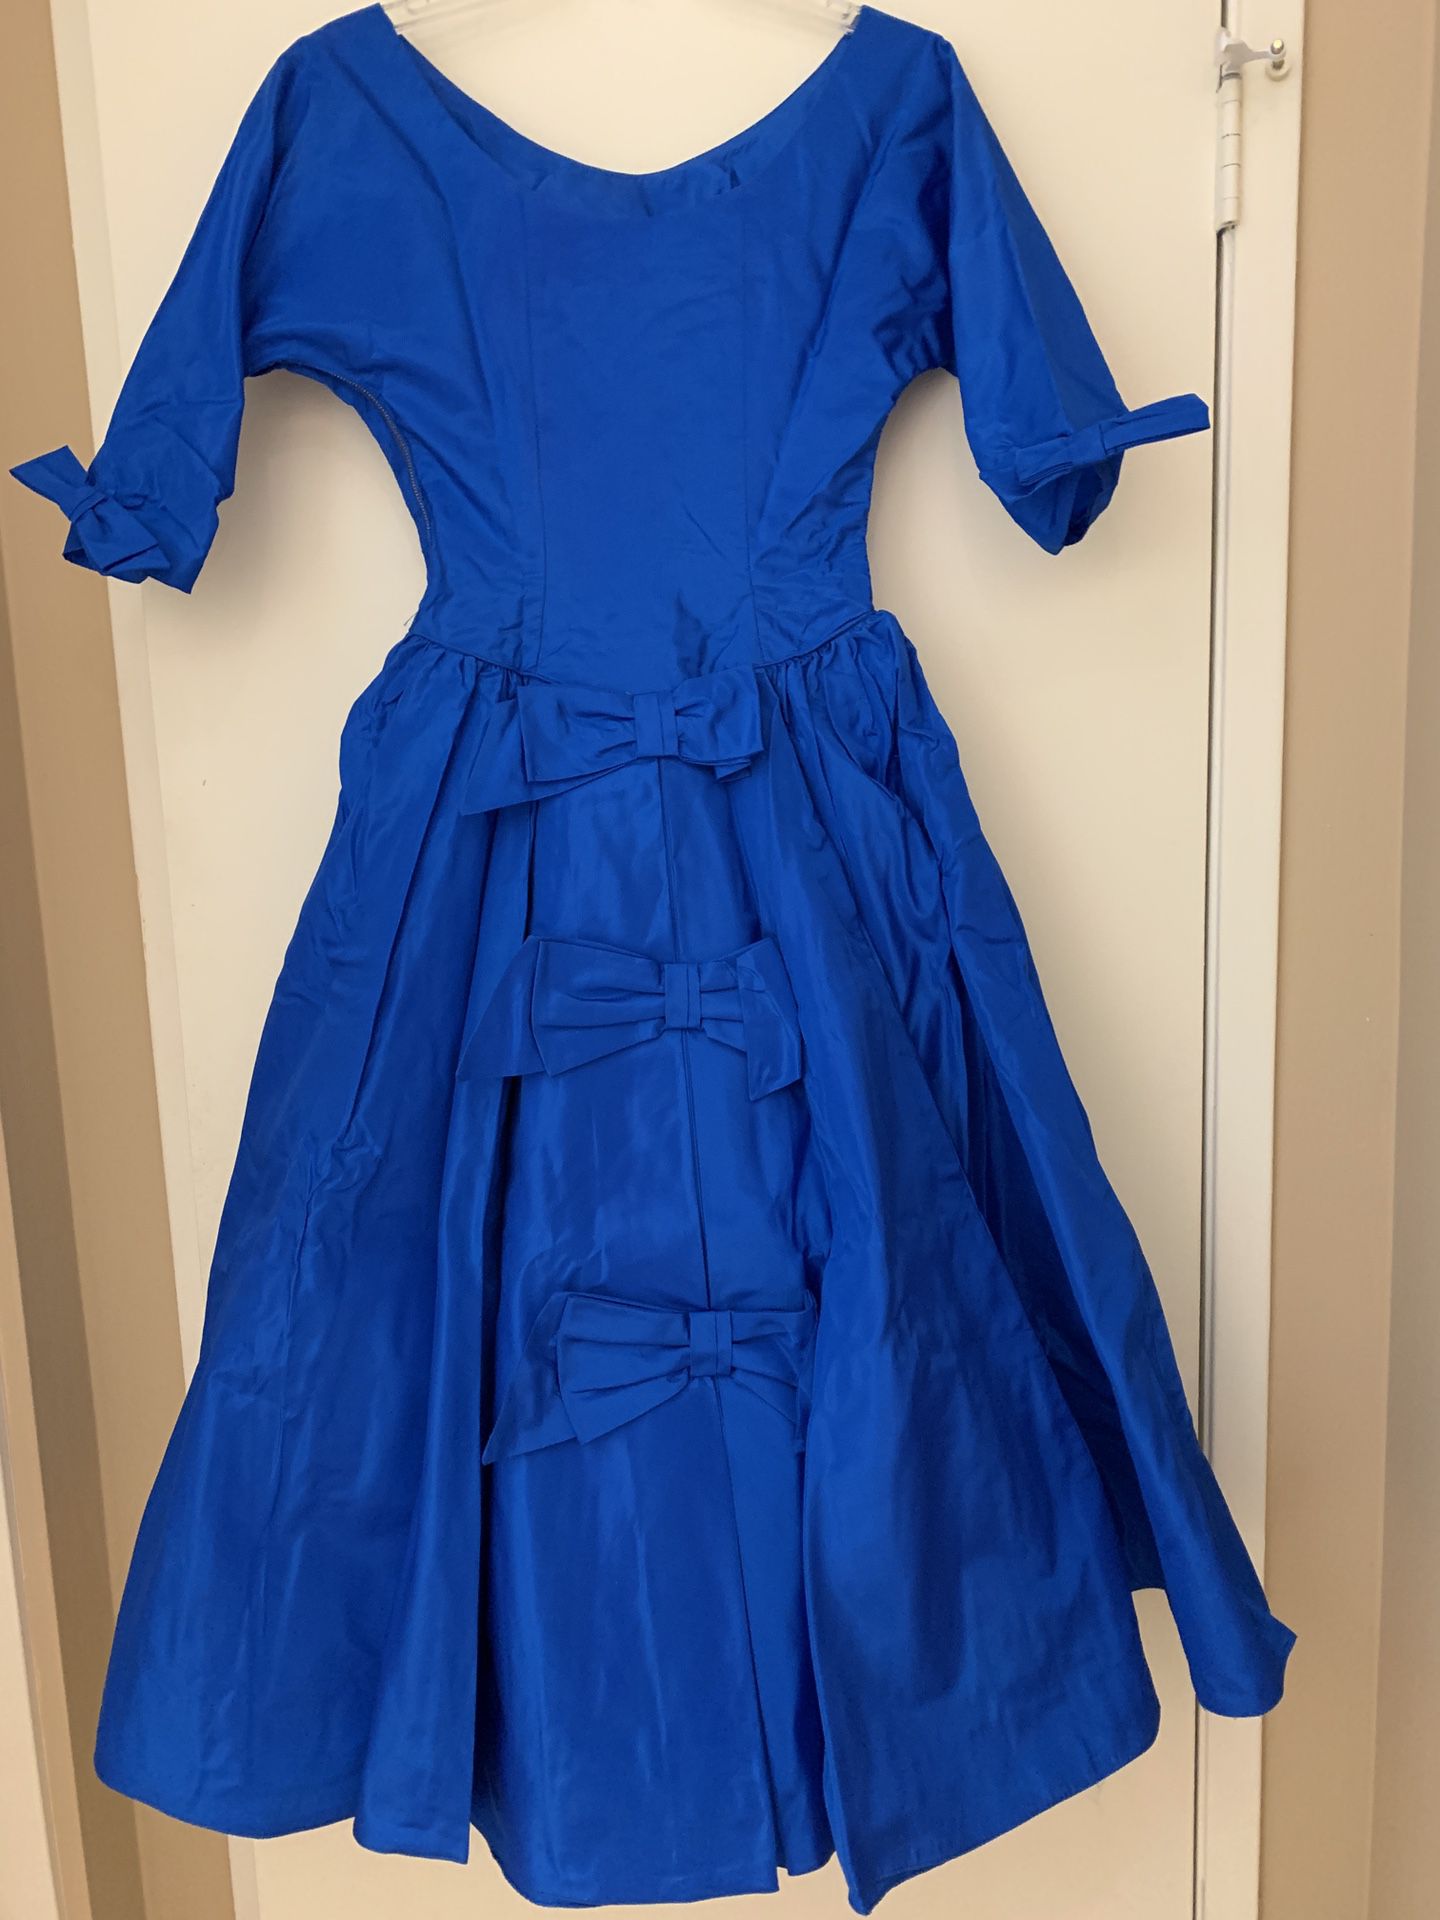 Vintage 1950s Royal Blue Taffeta party/Prom Dress S